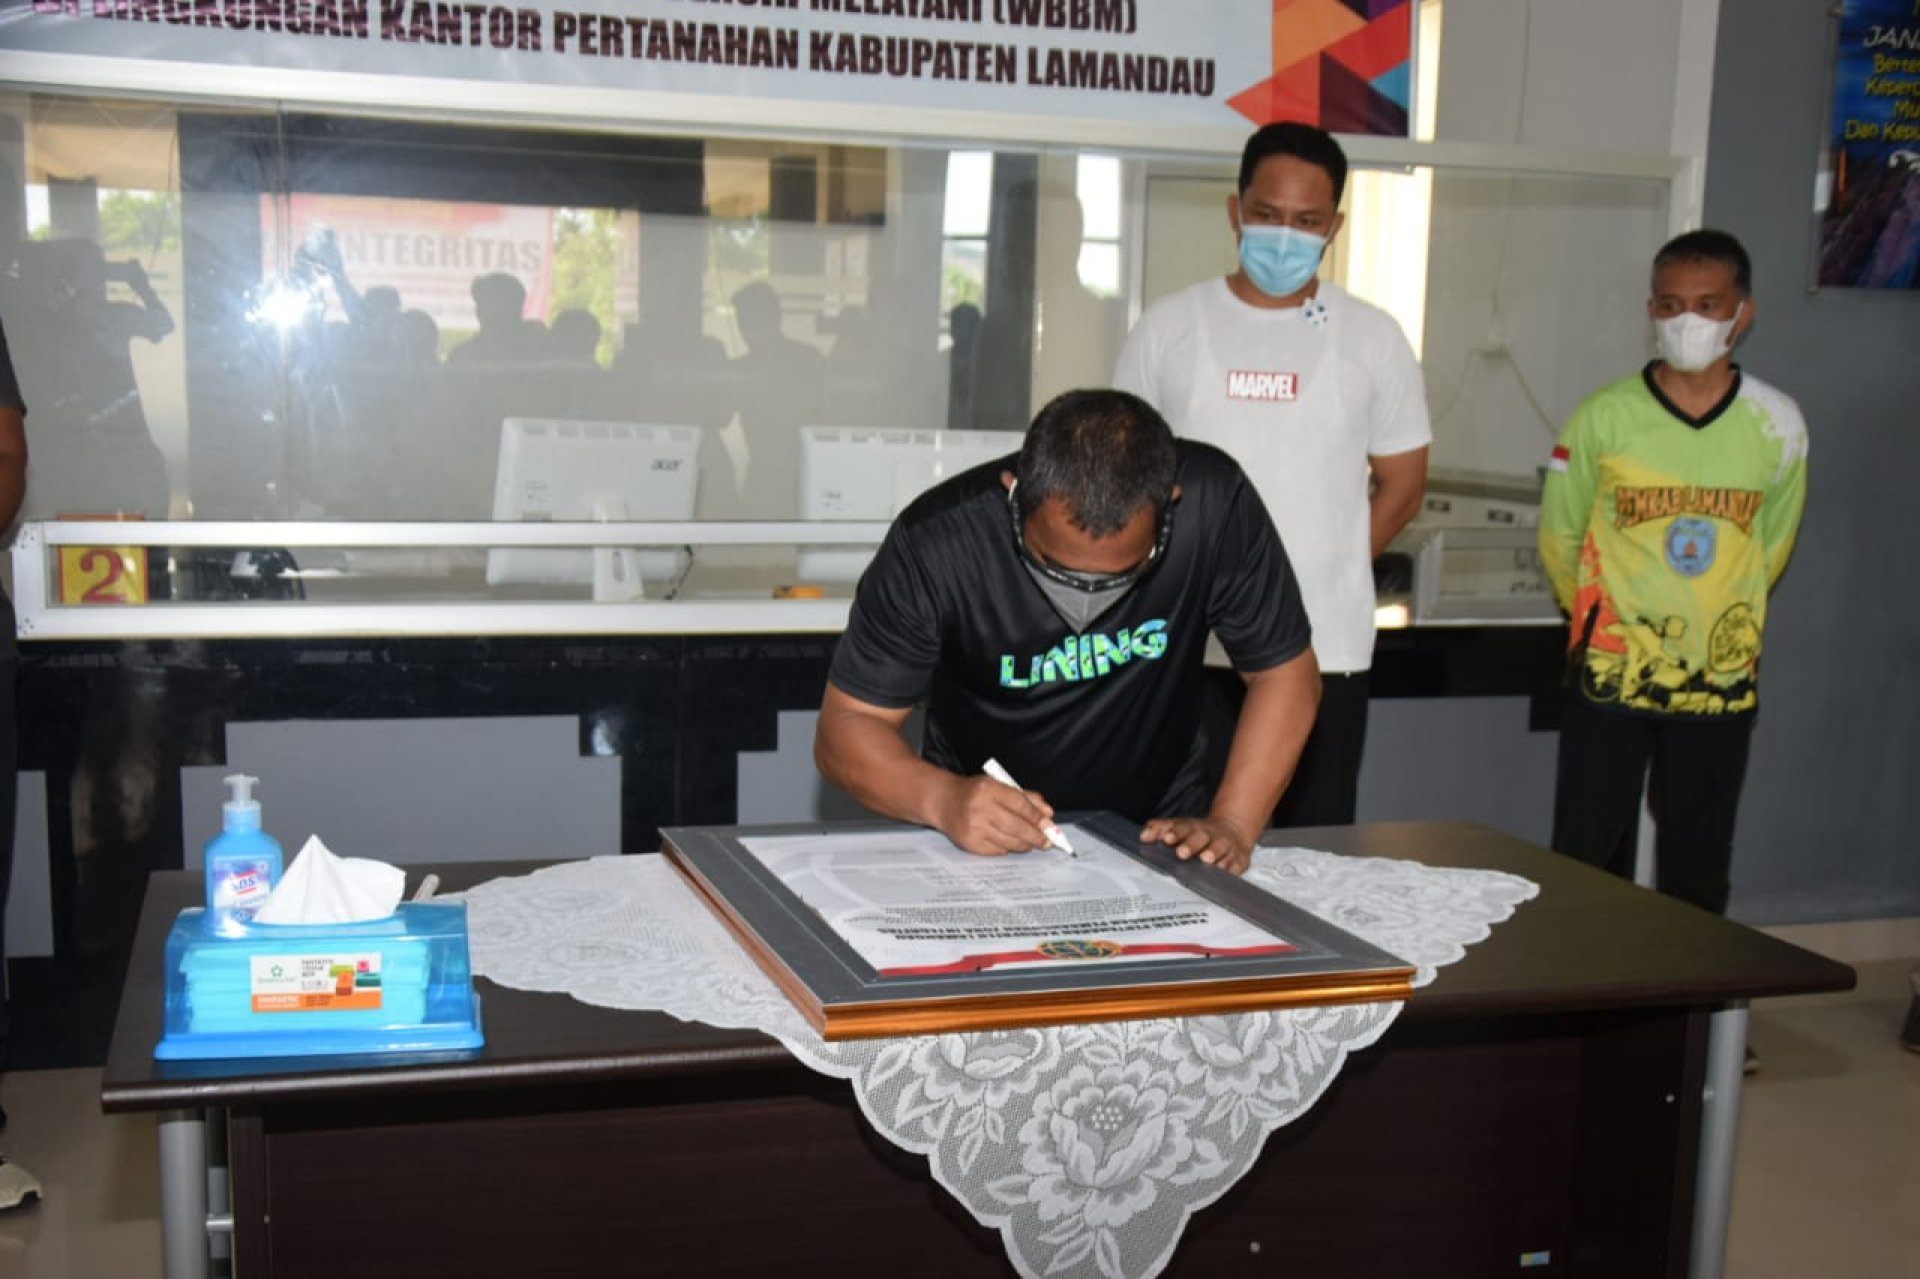 Wagub Kalteng Apresiasi Pencanangan Pembangunan Zona Integritas di Lingkungan Kantor Pertanahan Kabupaten Lamandau